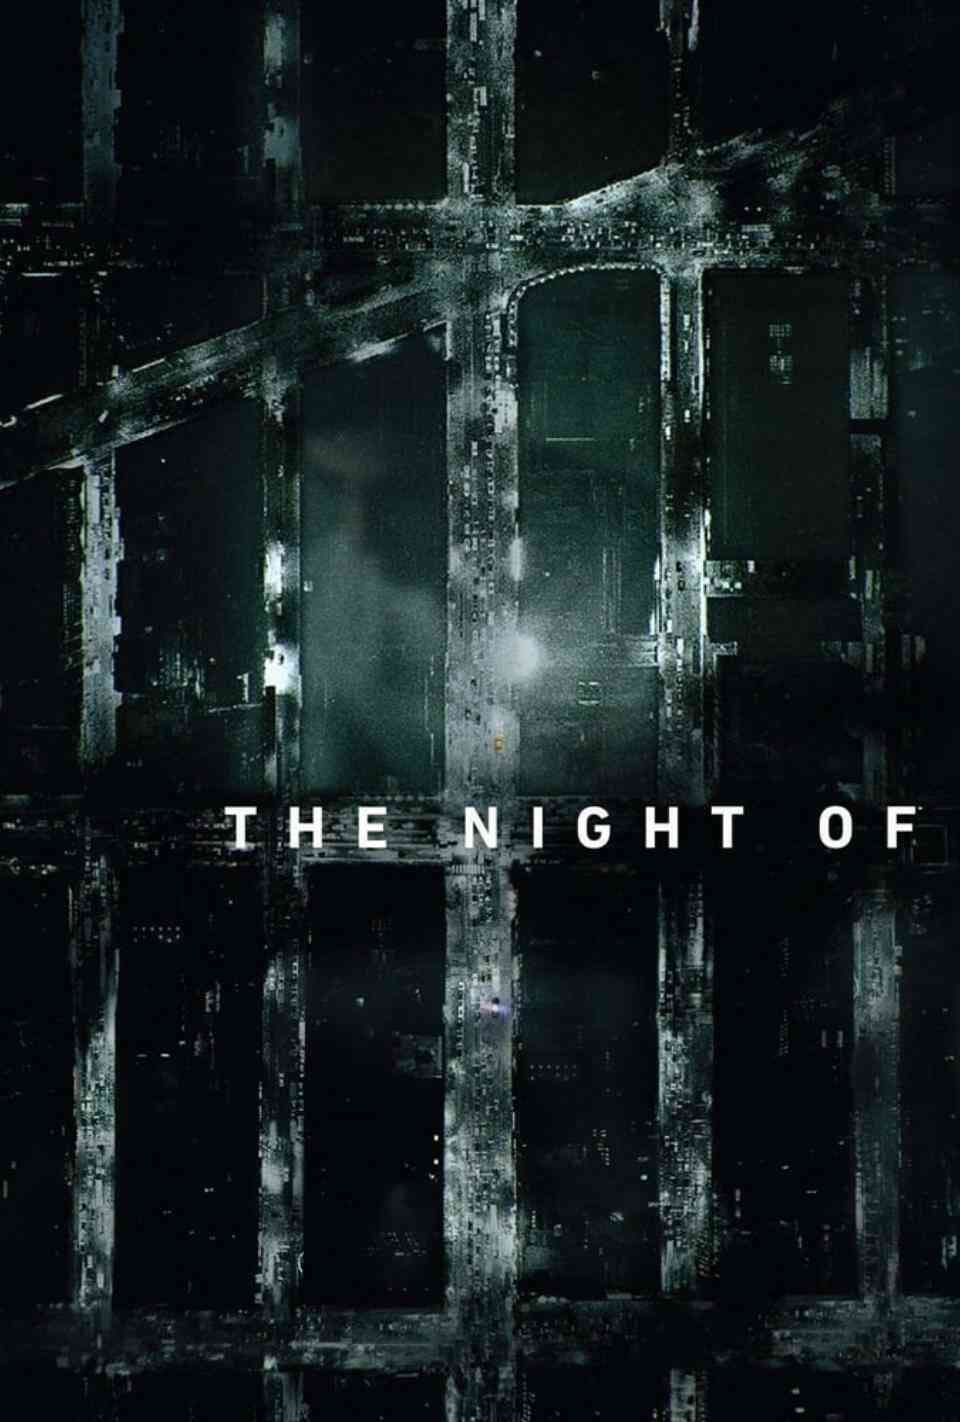 Read The Night Of screenplay.